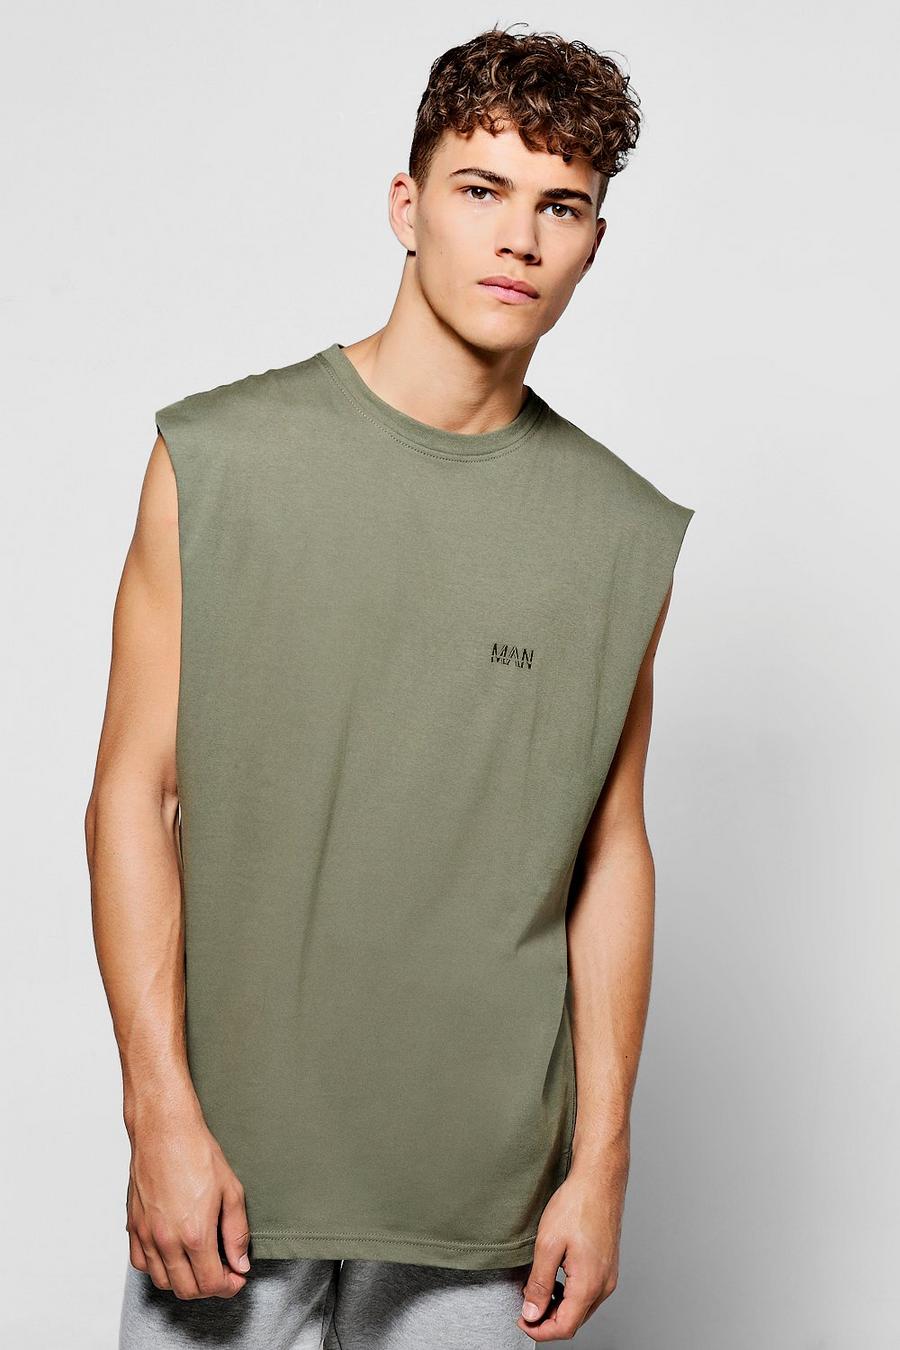 https://media.boohoo.com/i/boohoo/mzz68949_khaki_xl/male-khaki-oversized-sleeveless-man-t-shirt/?w=900&qlt=default&fmt.jp2.qlt=70&fmt=auto&sm=fit